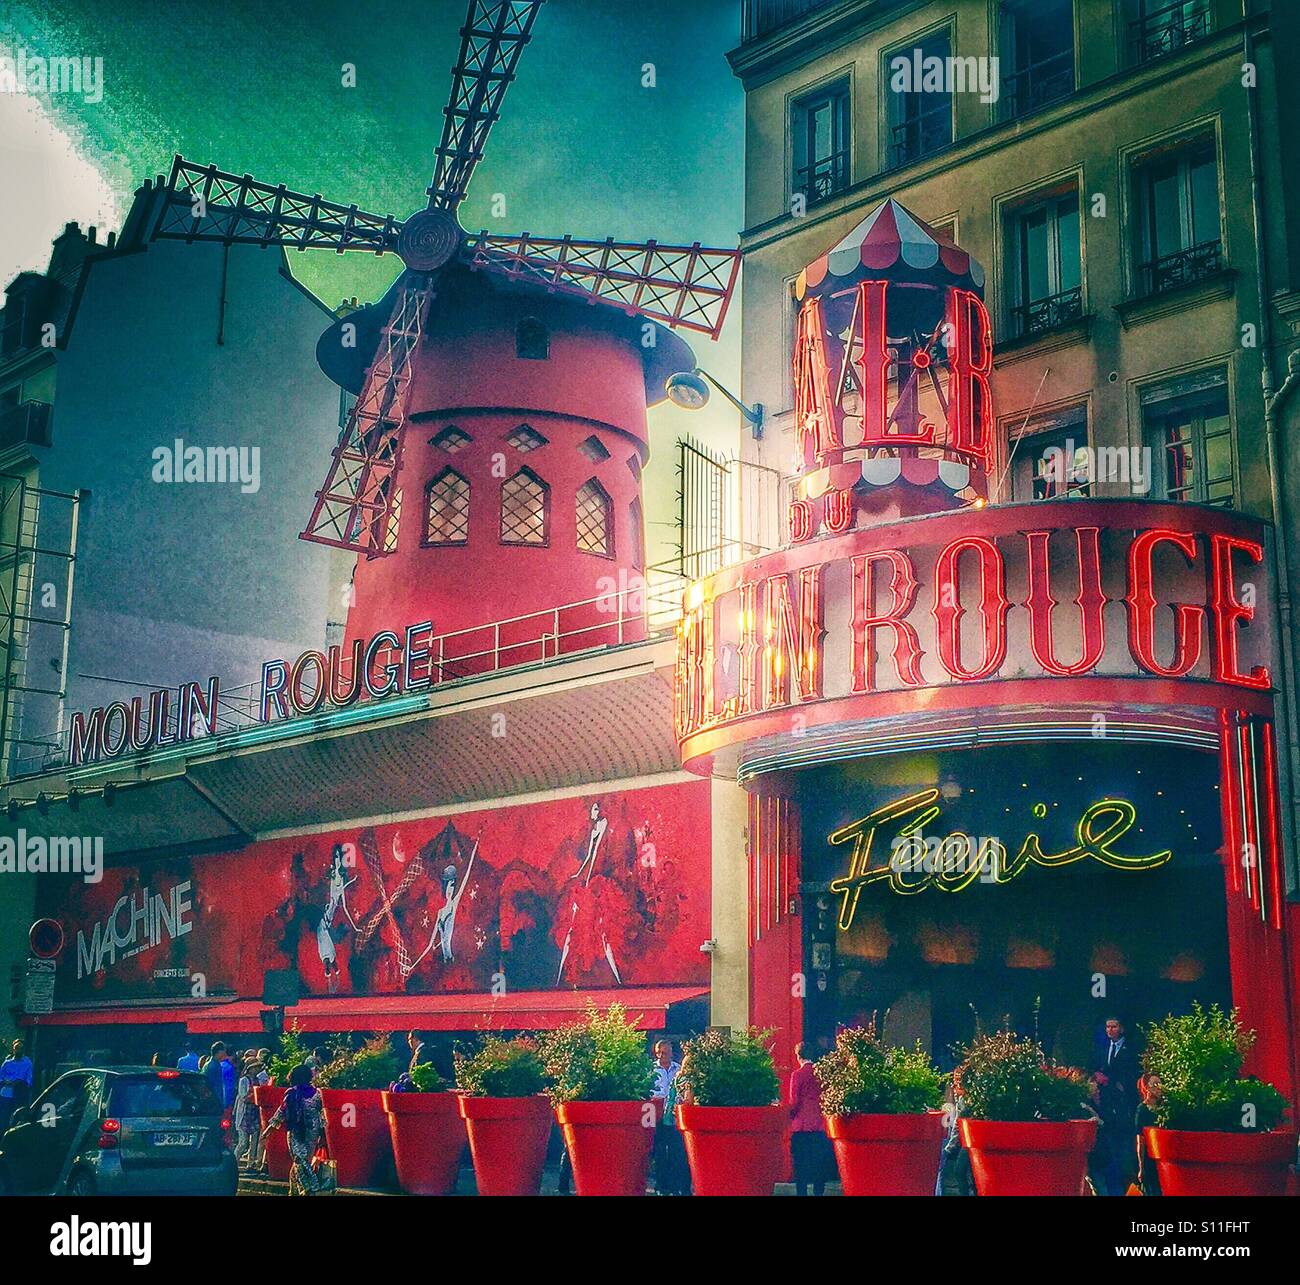 Moulin Rouge, famous cabaret in Paris, France Stock Photo